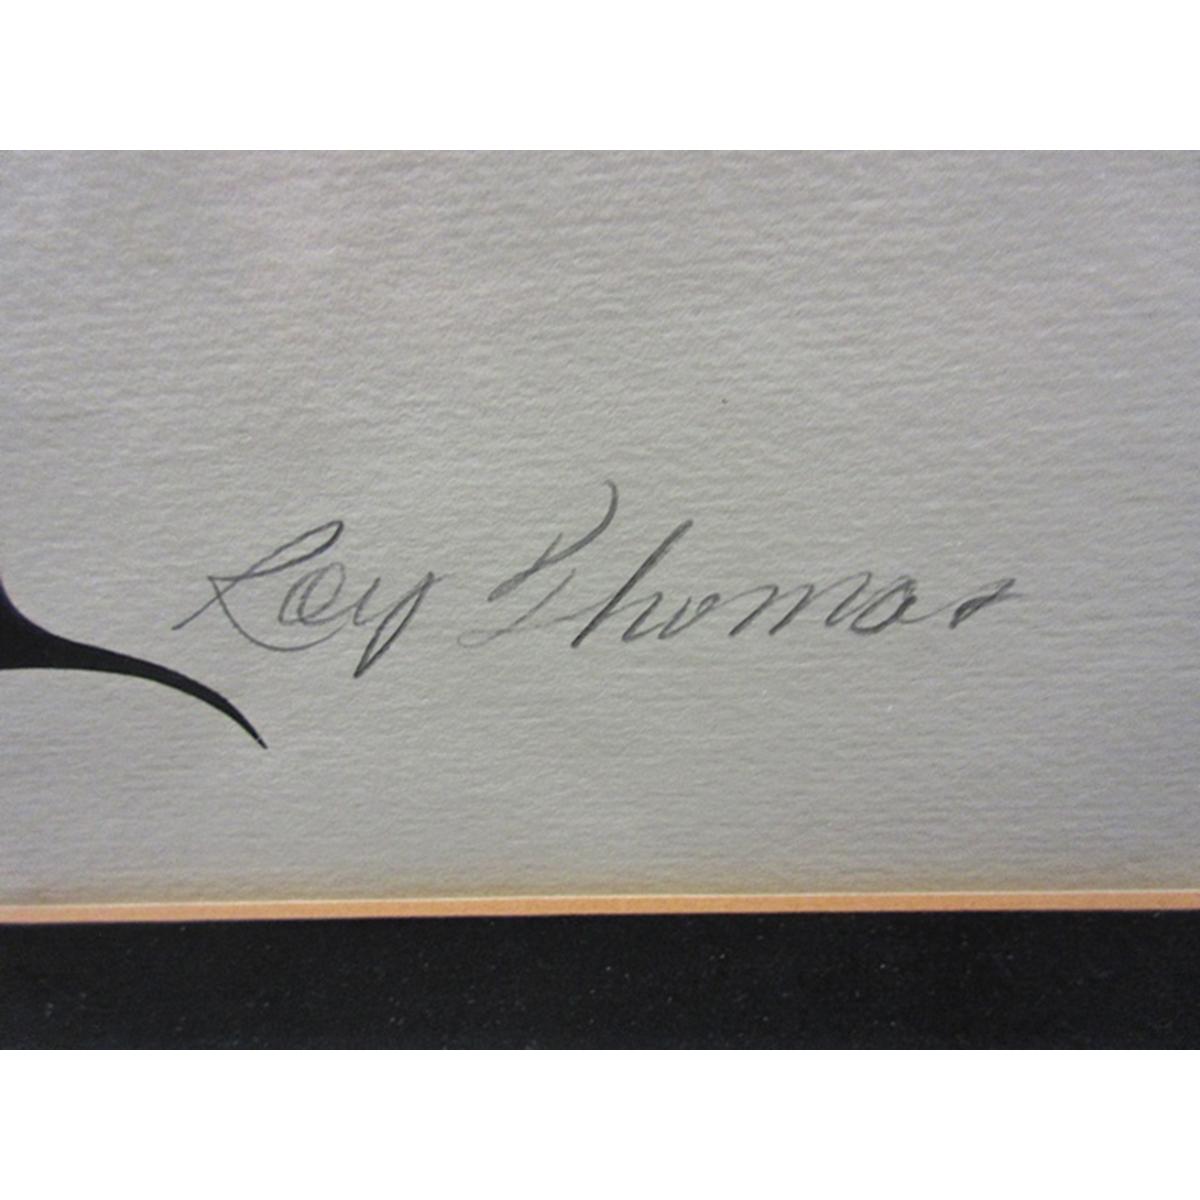 ROY THOMAS (NATIVE CANADIAN, 1949-2004)   